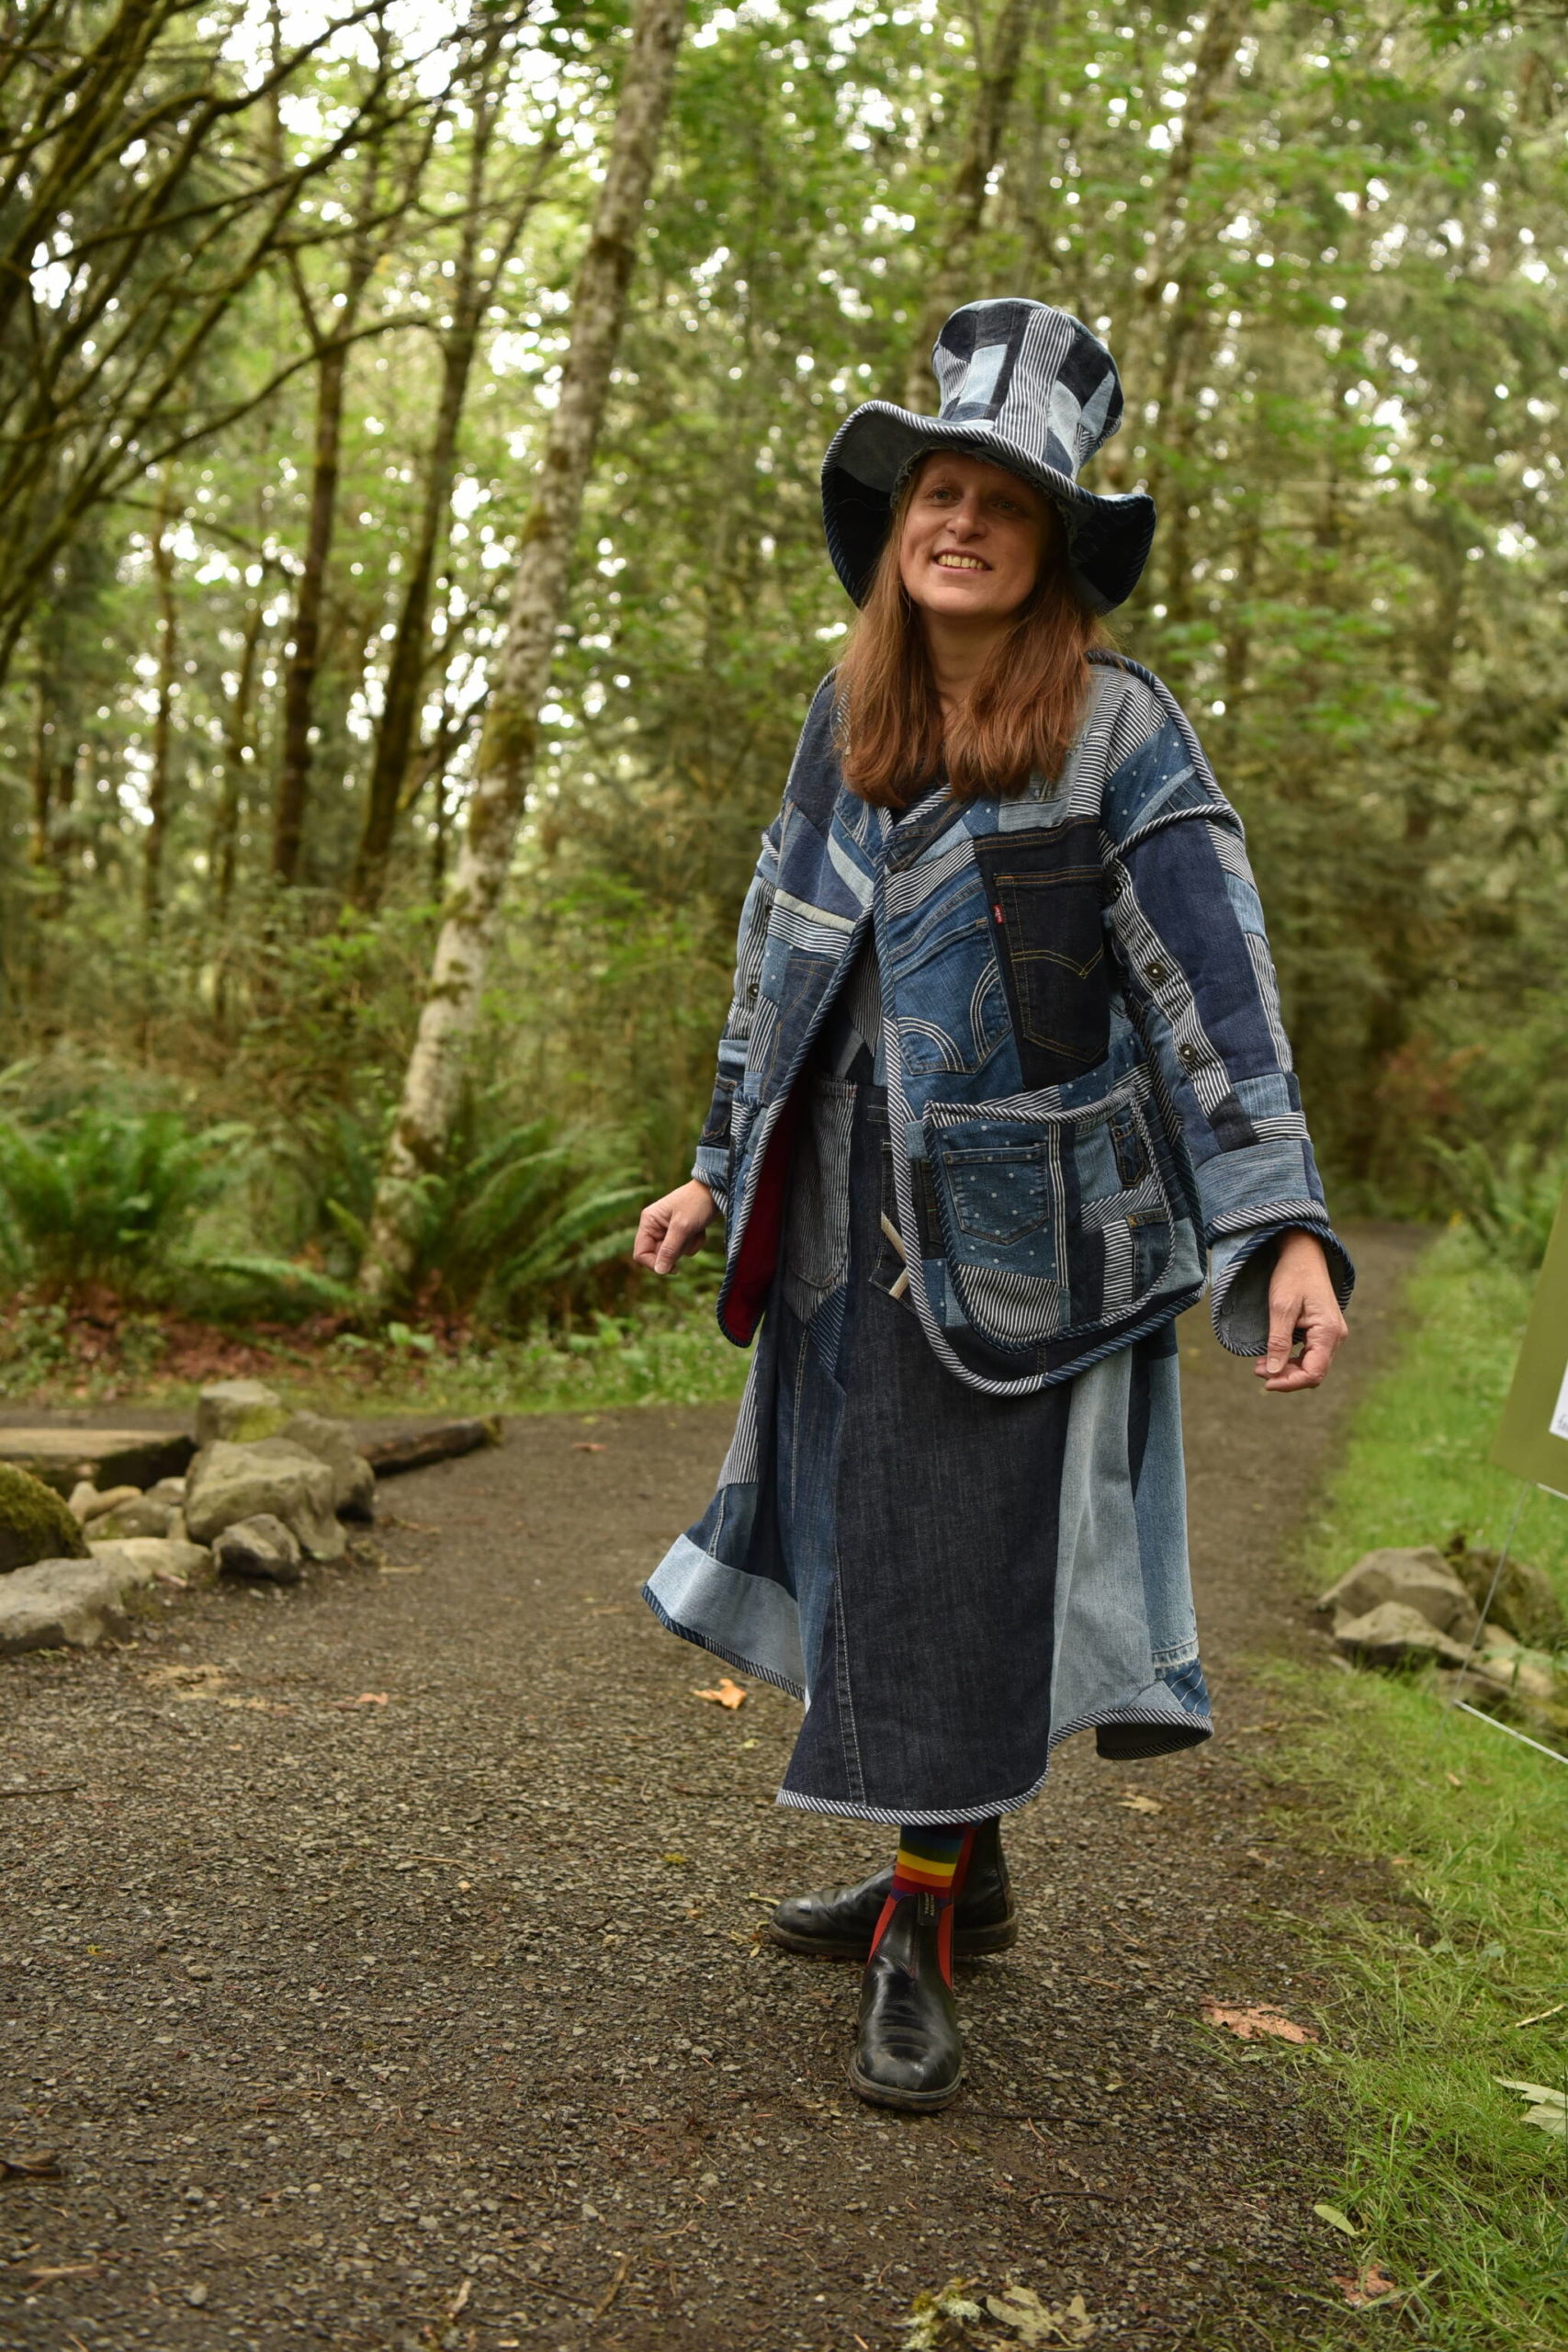 Isobel Coney modeled her denim dress, coat and hat ensemble during the Trashion Show hosted by Bainbridge Zero Waste at IslandWood June 12.